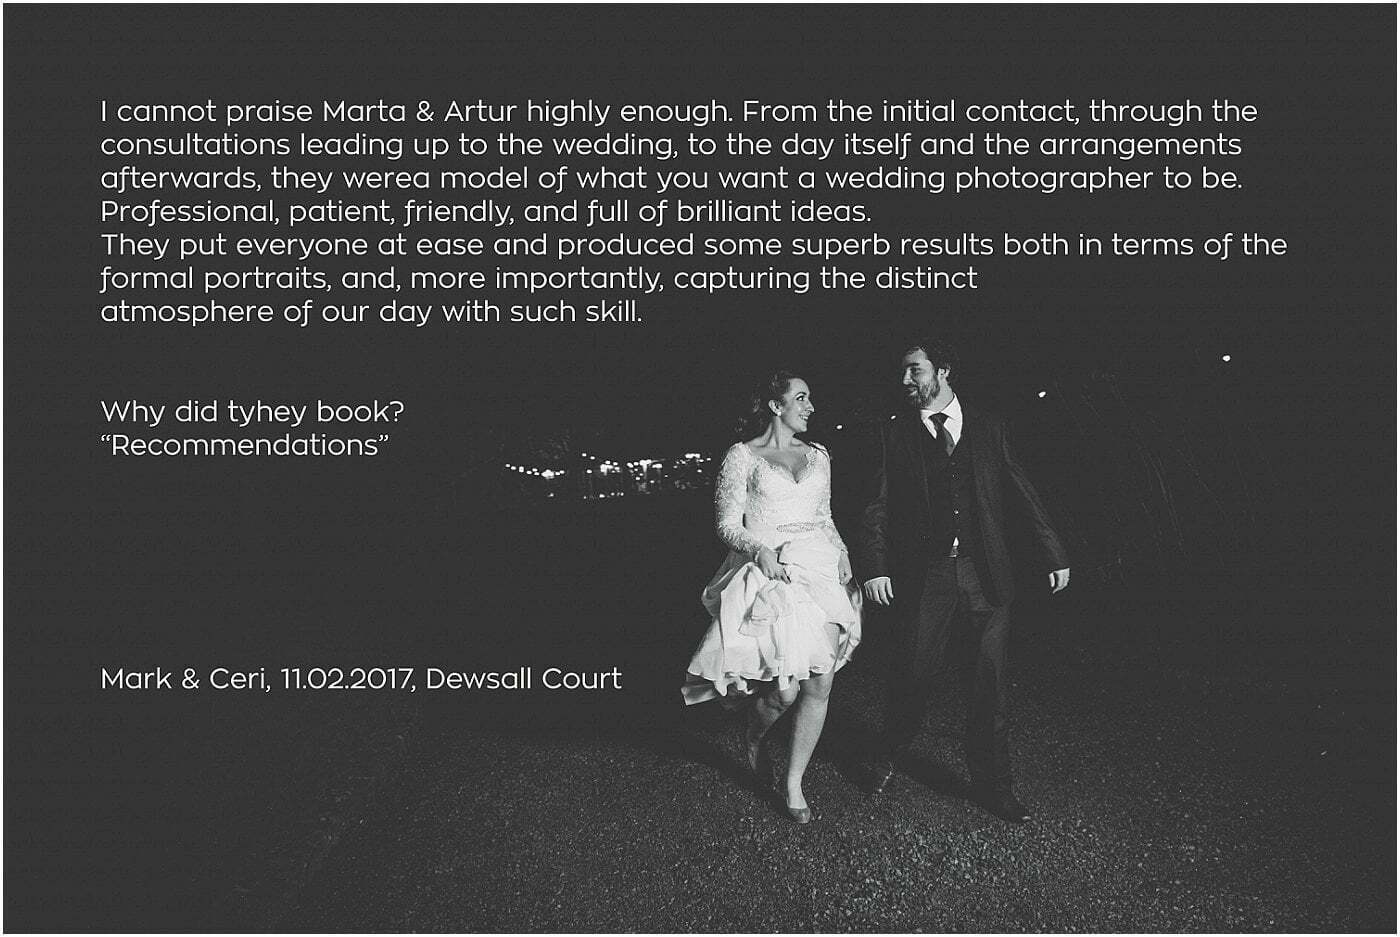 Dewsall Court wedding photography